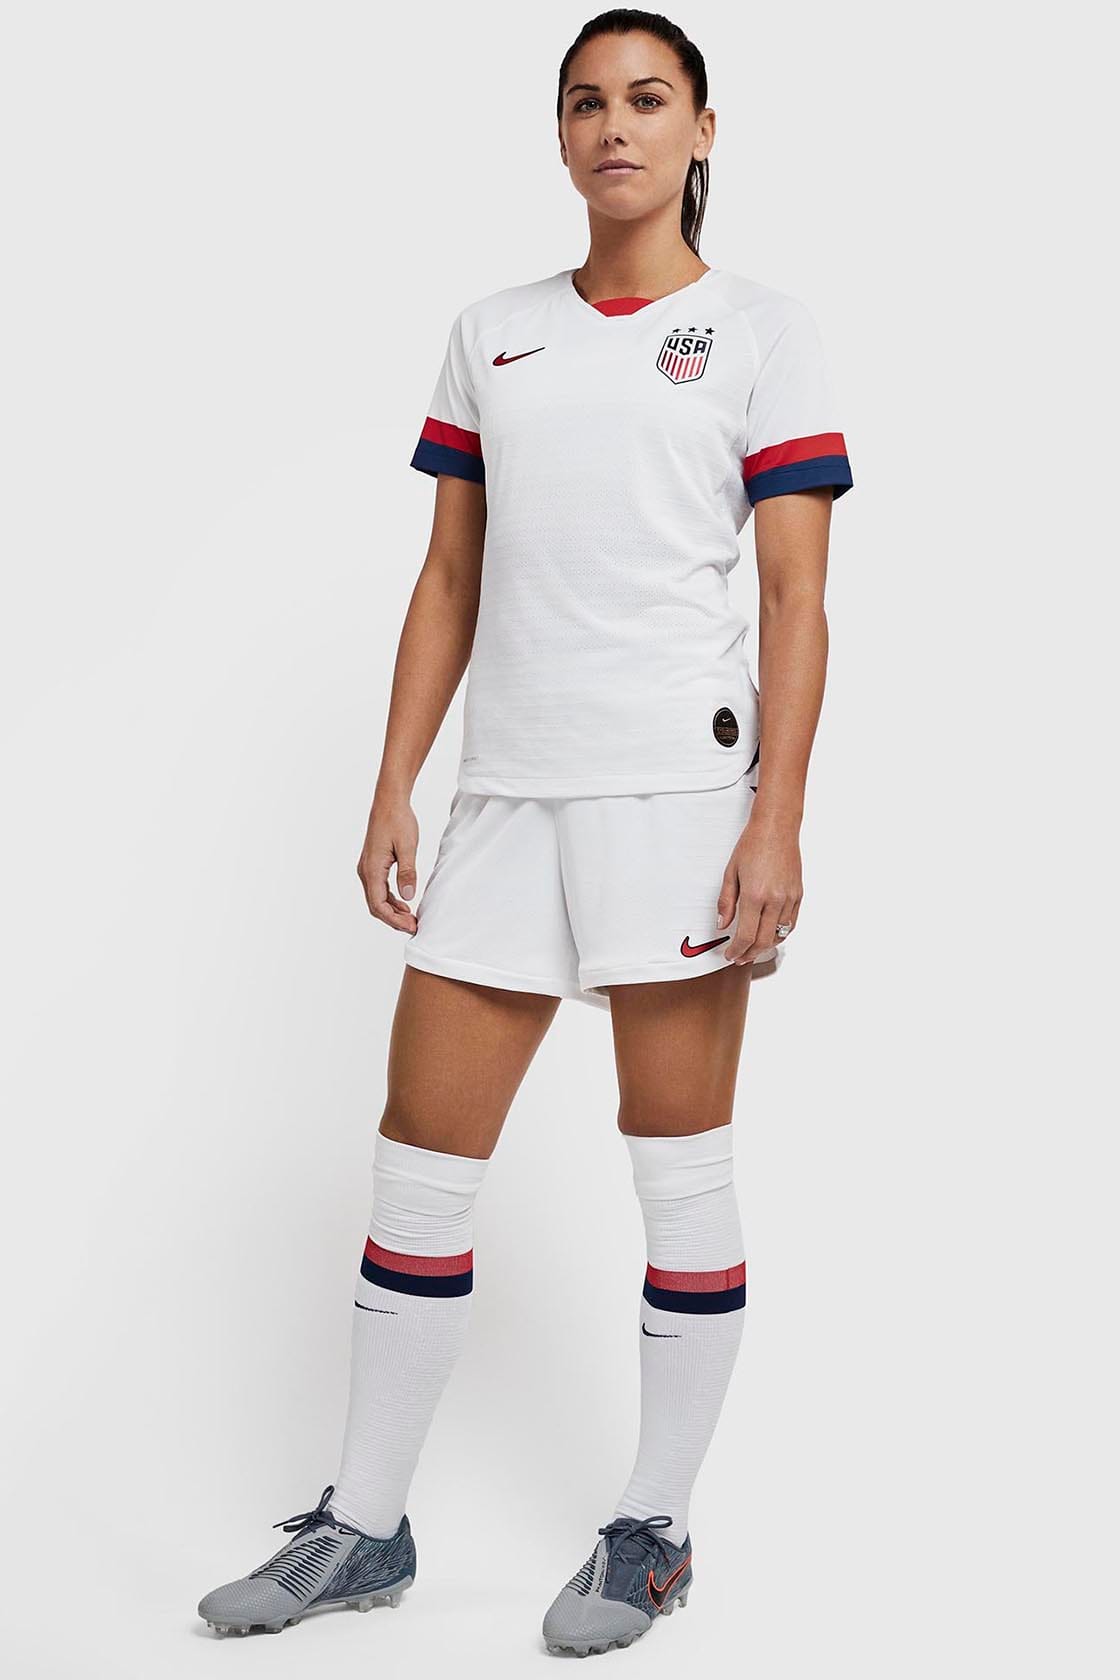 Nike 2019 Women's World Cup Kit Reveal 